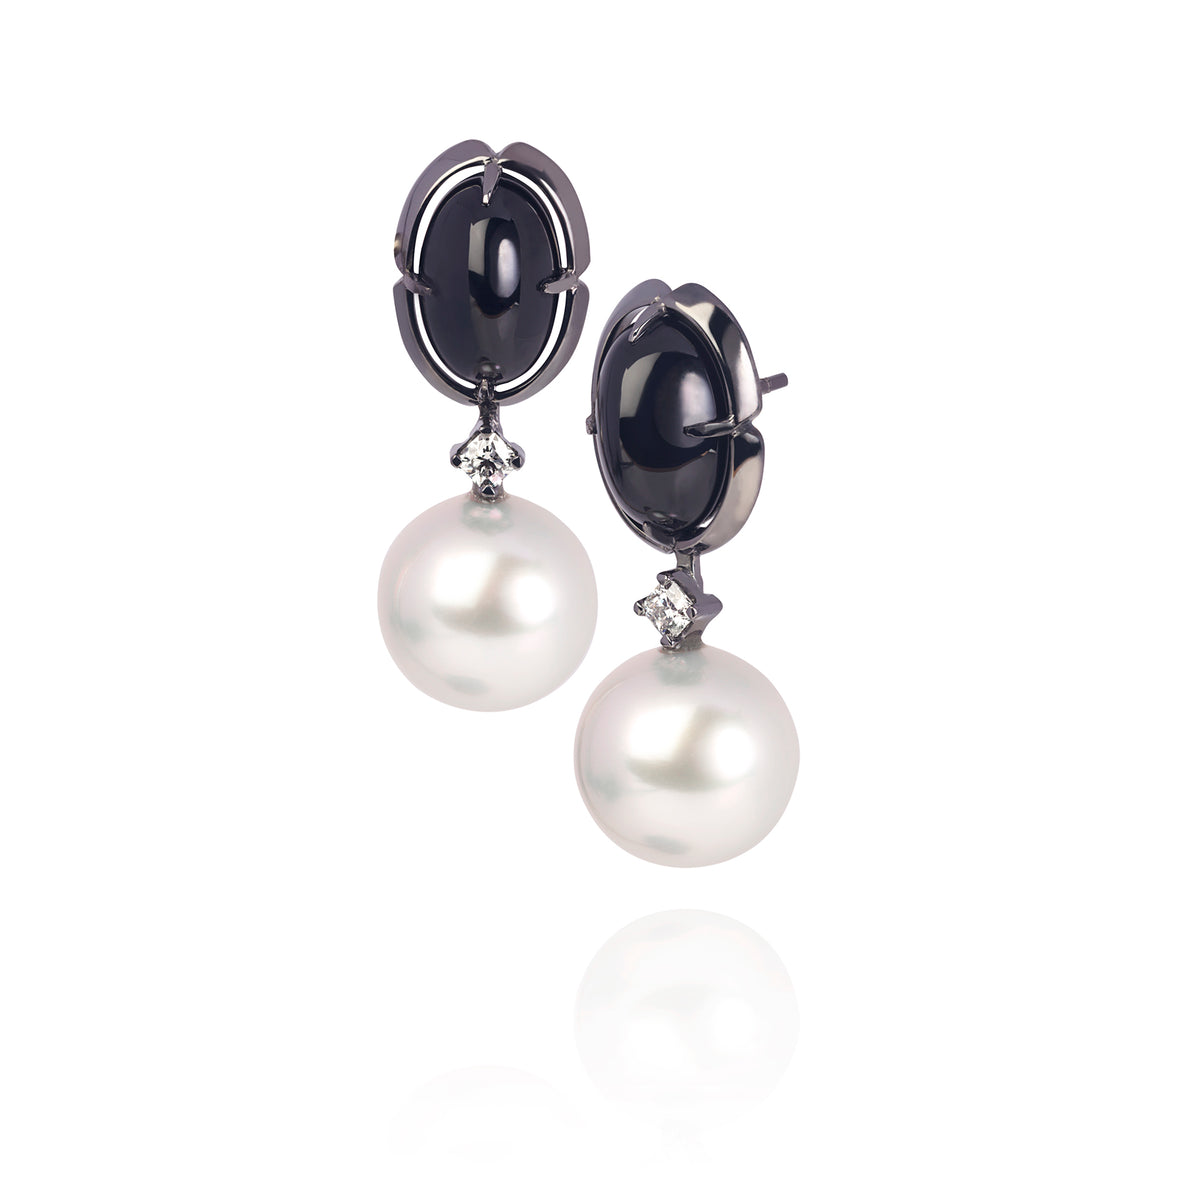 Black Spinel and Australian South Sea Pearl Earrings